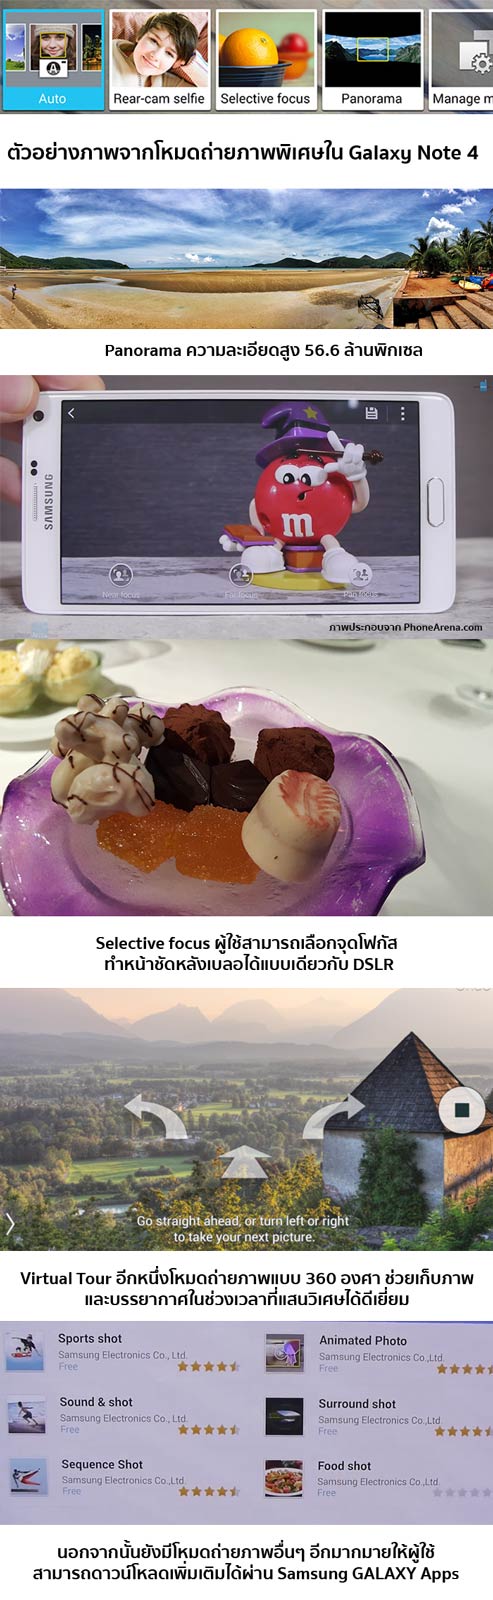 Samsung Galaxy Note 4 ปะทะ Apple iPhone 6 Plus กล้องใครเจ๋งกว่ากัน!?